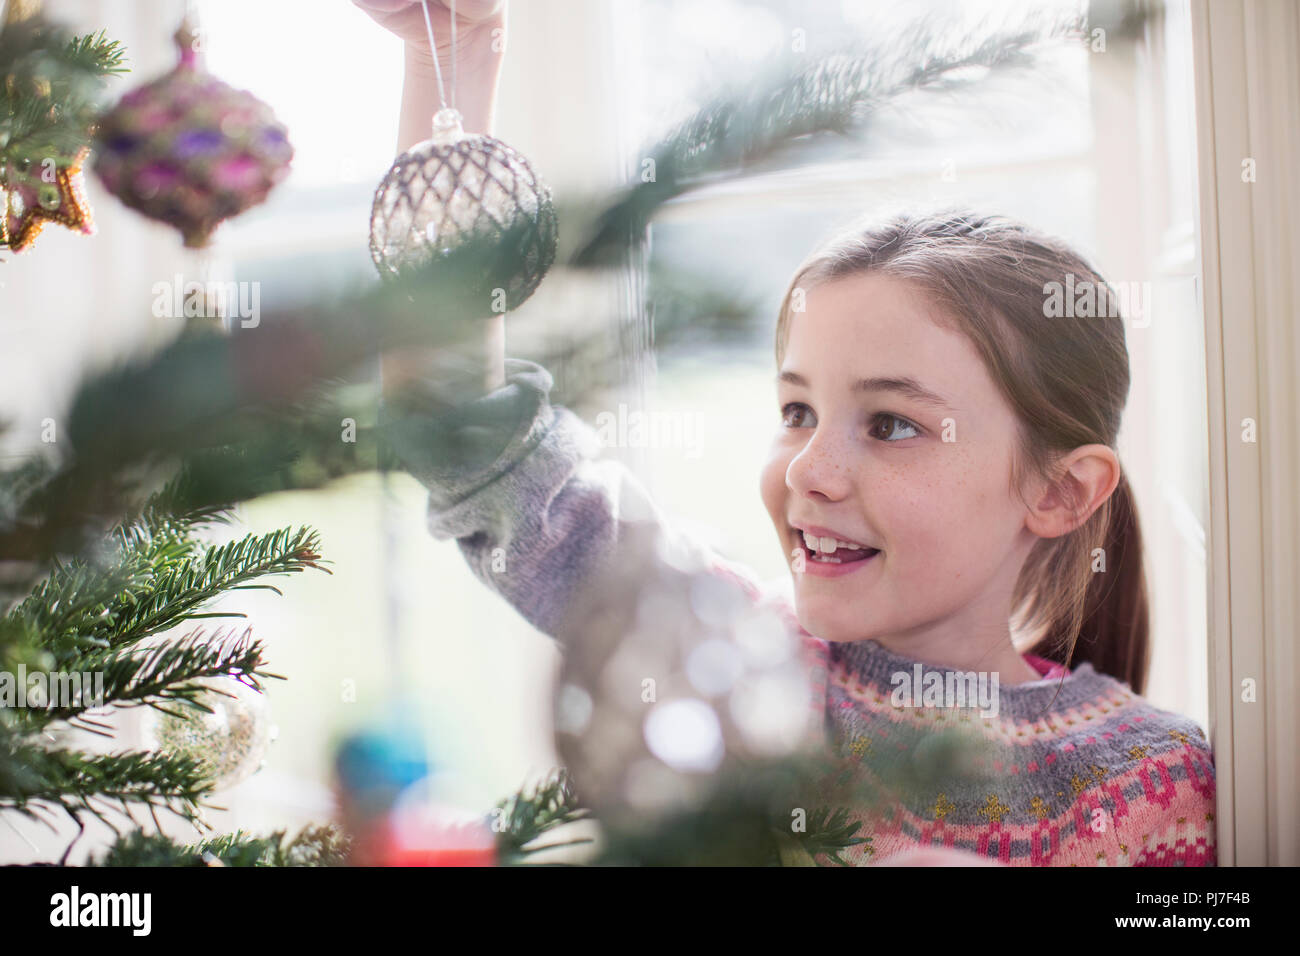 Girl decorating, hanging ornament on Christmas tree Stock Photo